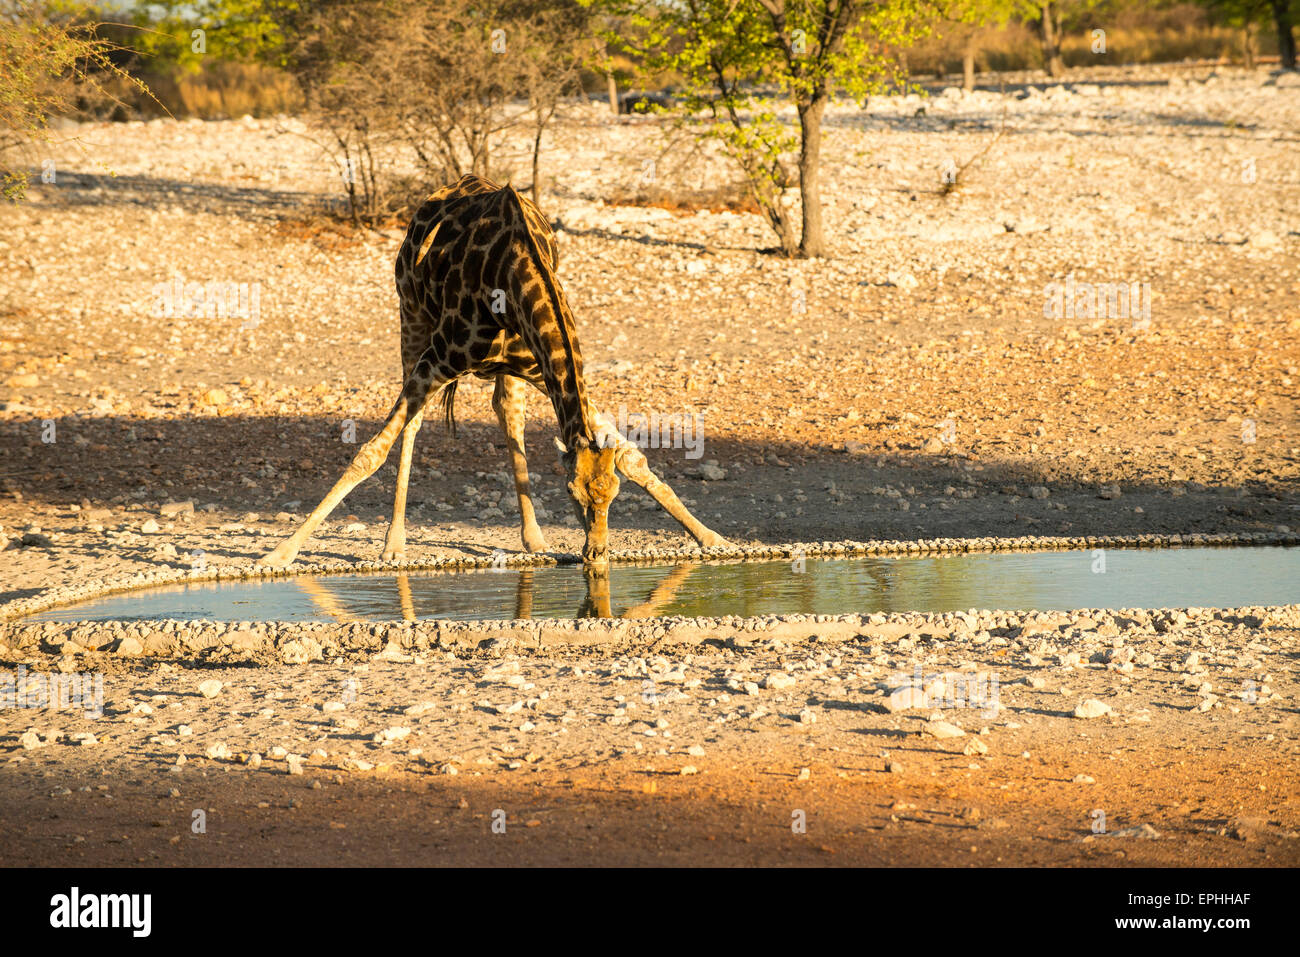 Africa, Namibia. Anderson Camp near Etosha National Park. Single giraffe drinking from waterhole. Stock Photo